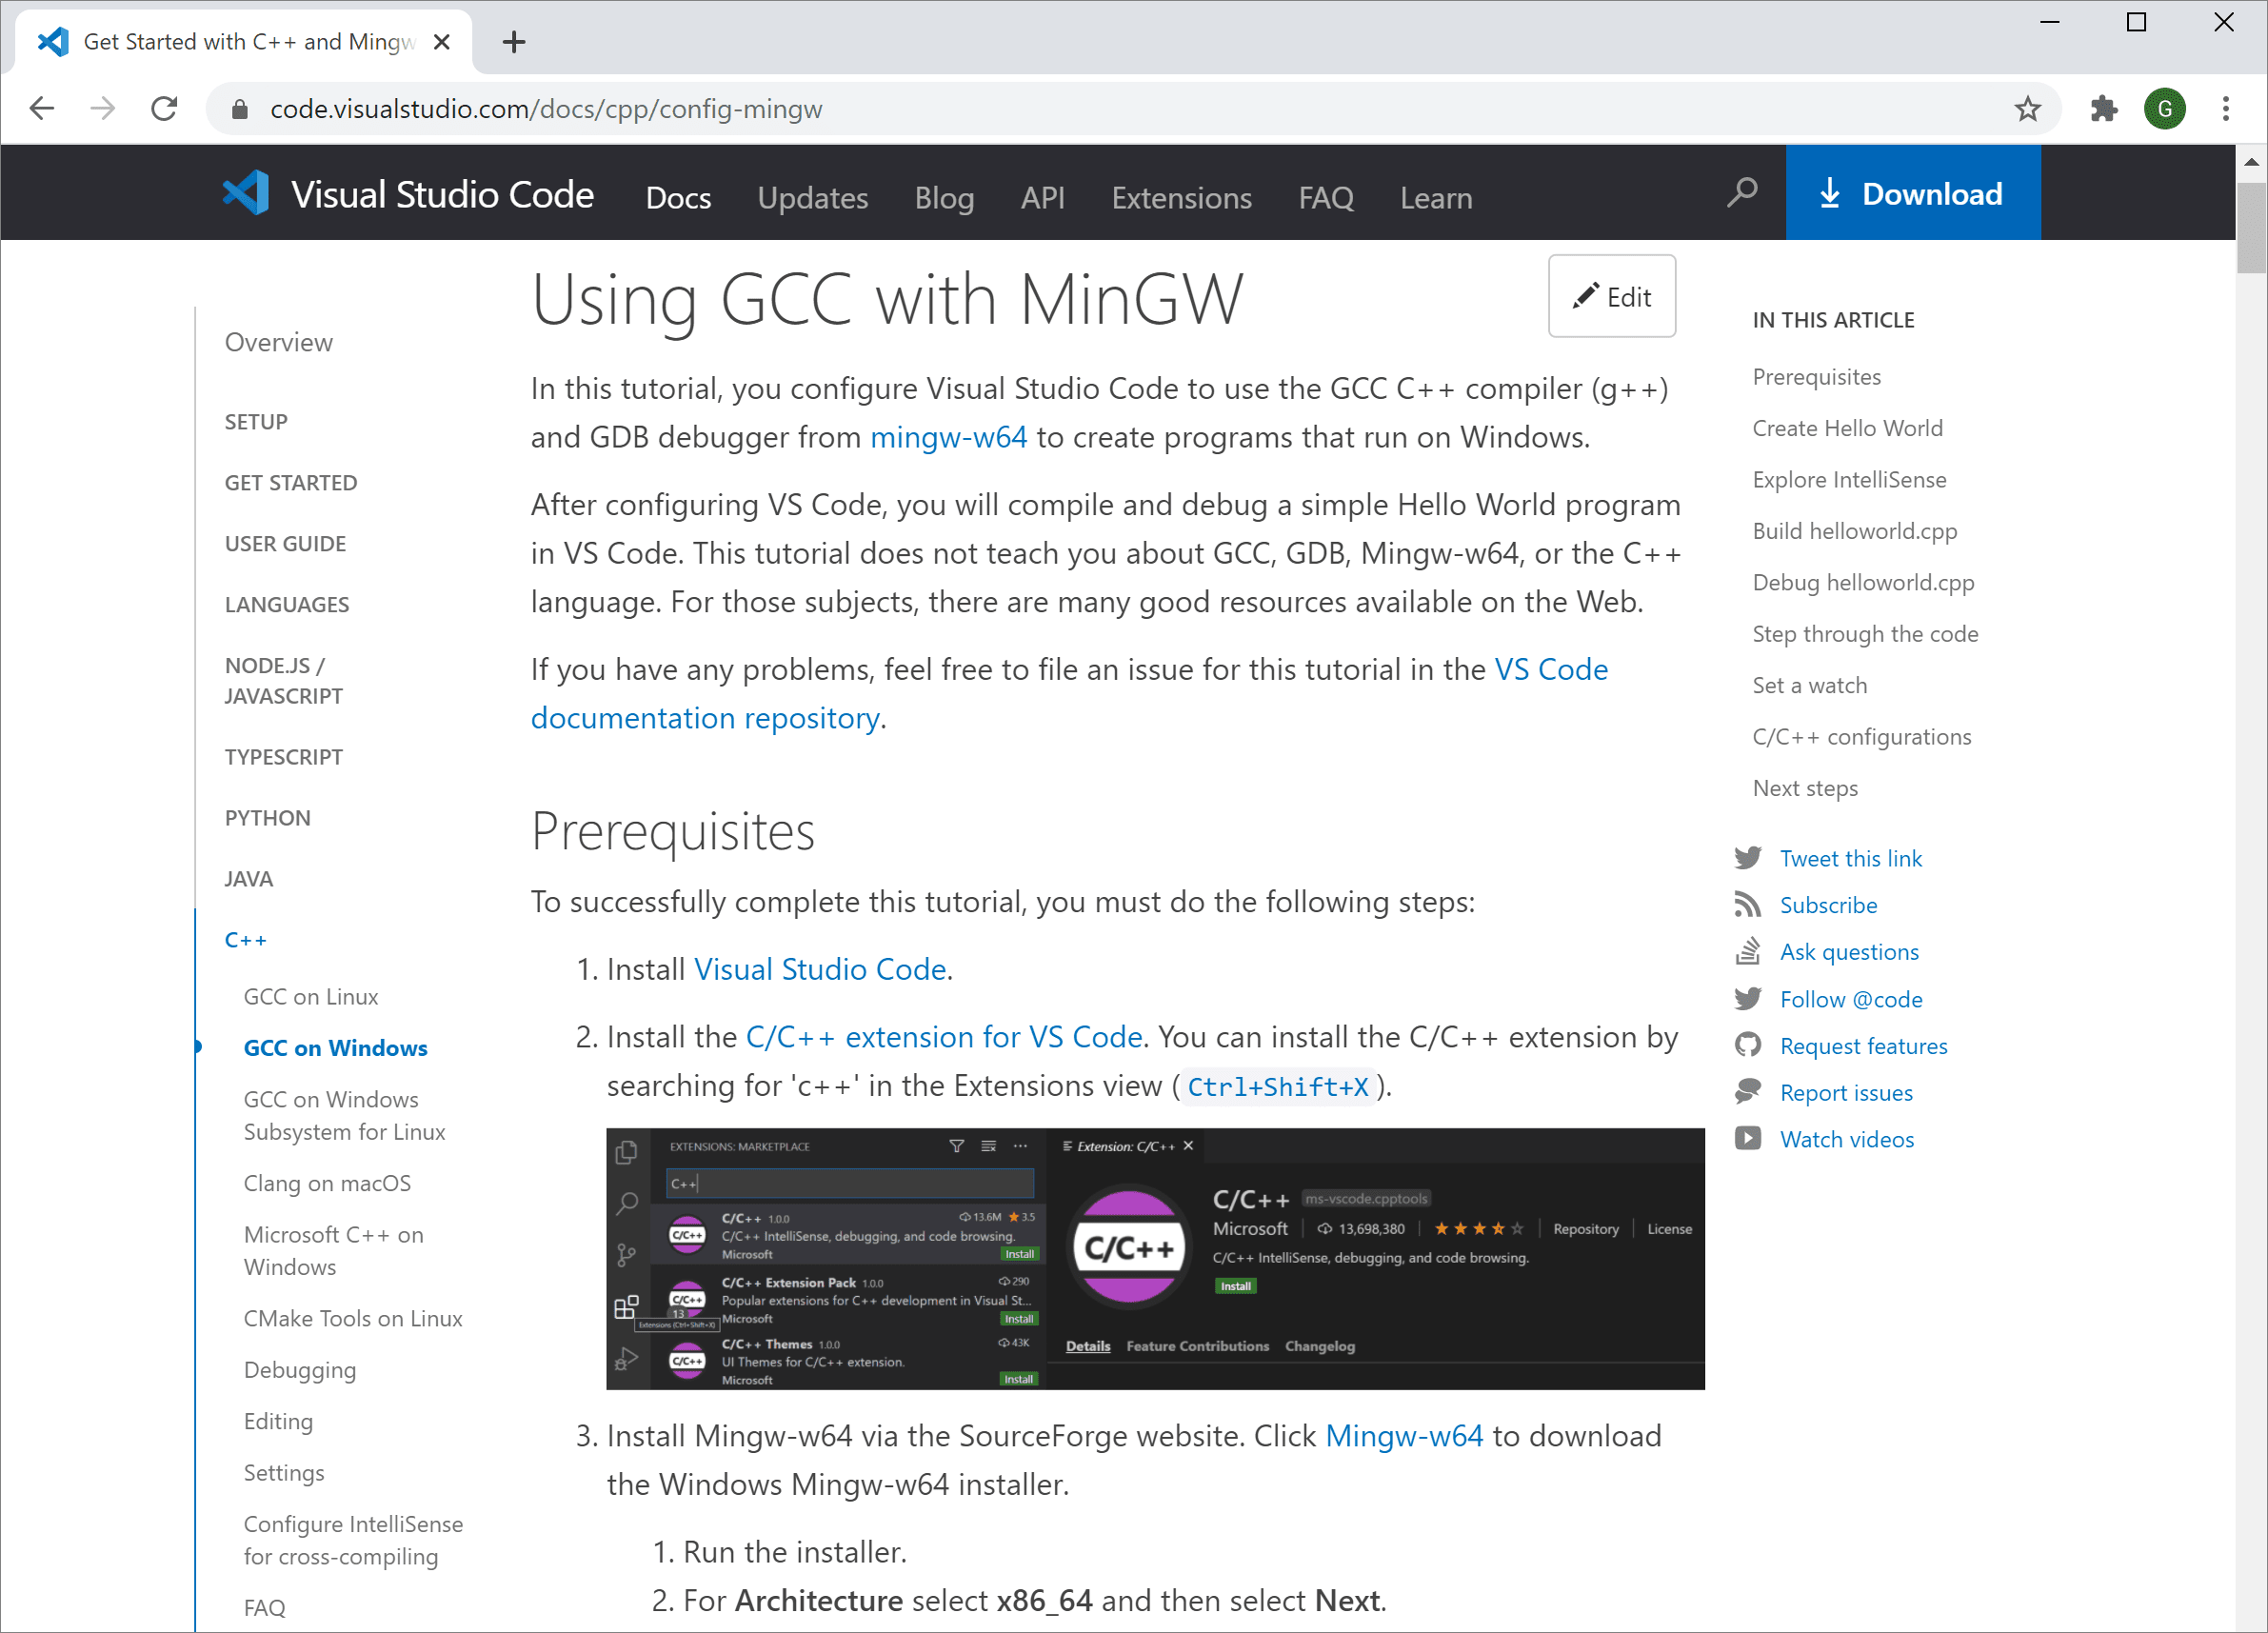 C++ TOC on code.visualstudio.com